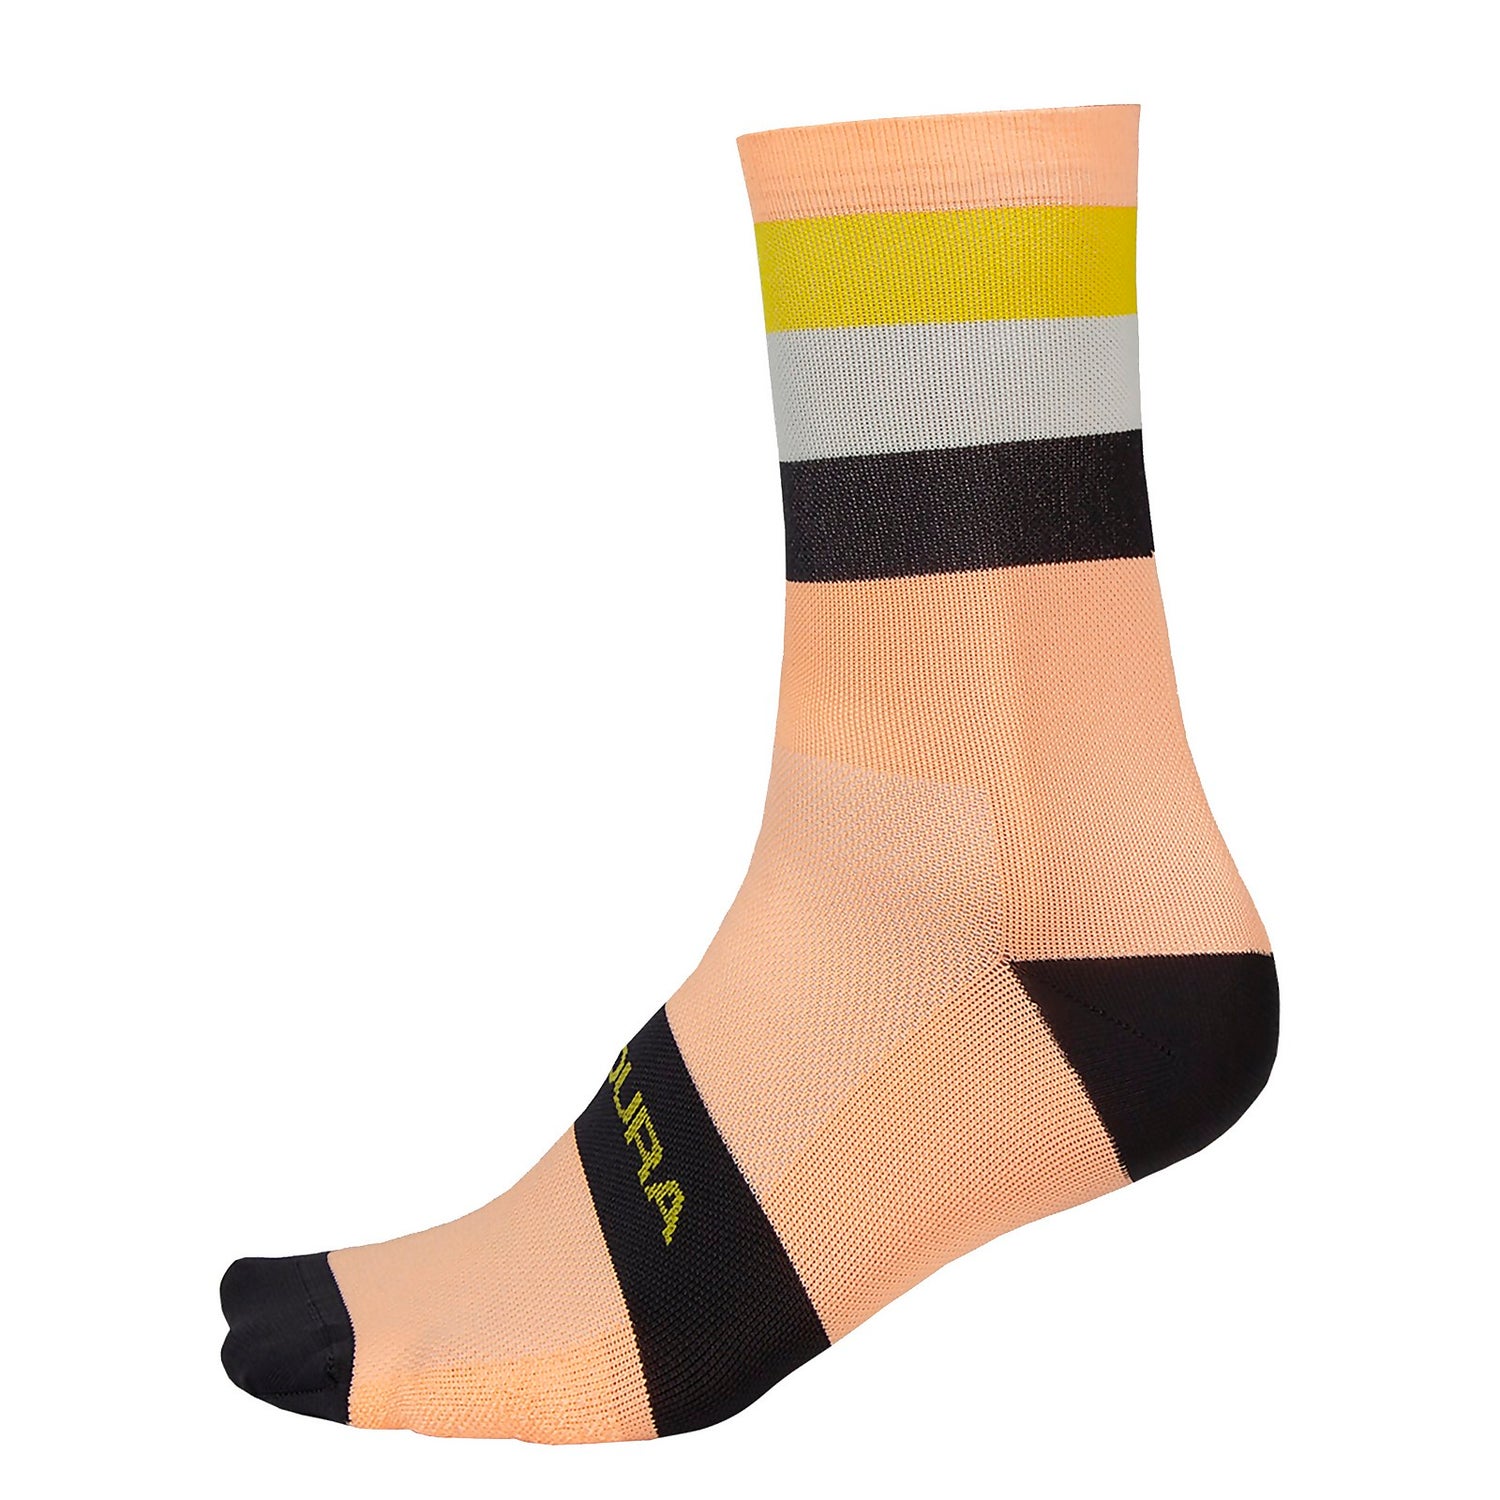 Bandwidth Sock - Neon Peach - L-XL